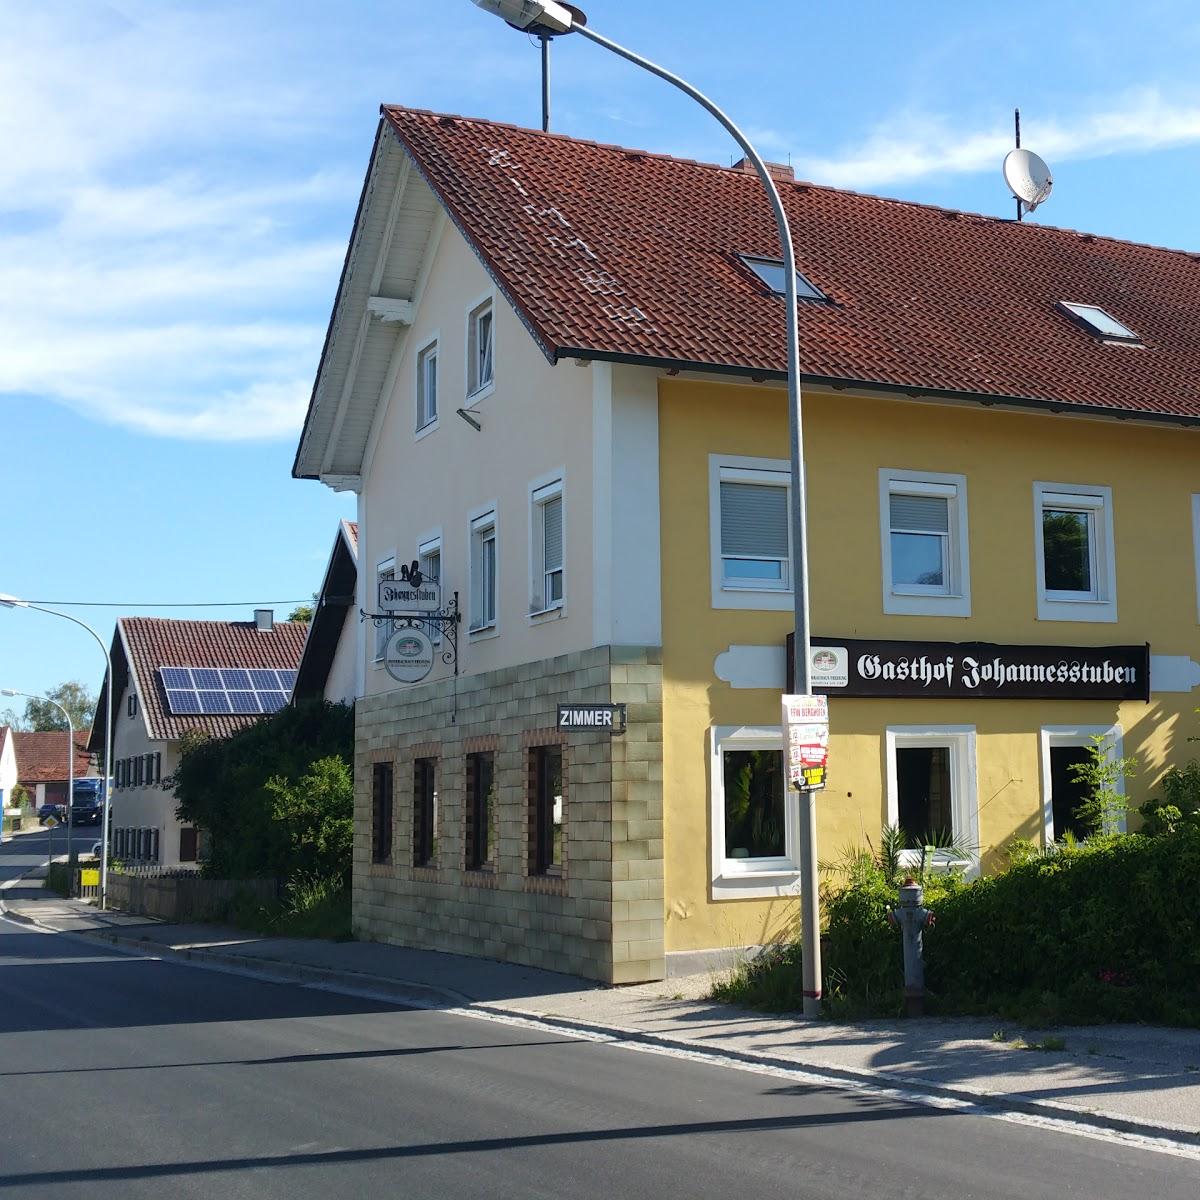 Restaurant "Johannesstuben - R. u. E. Häring" in Essenbach